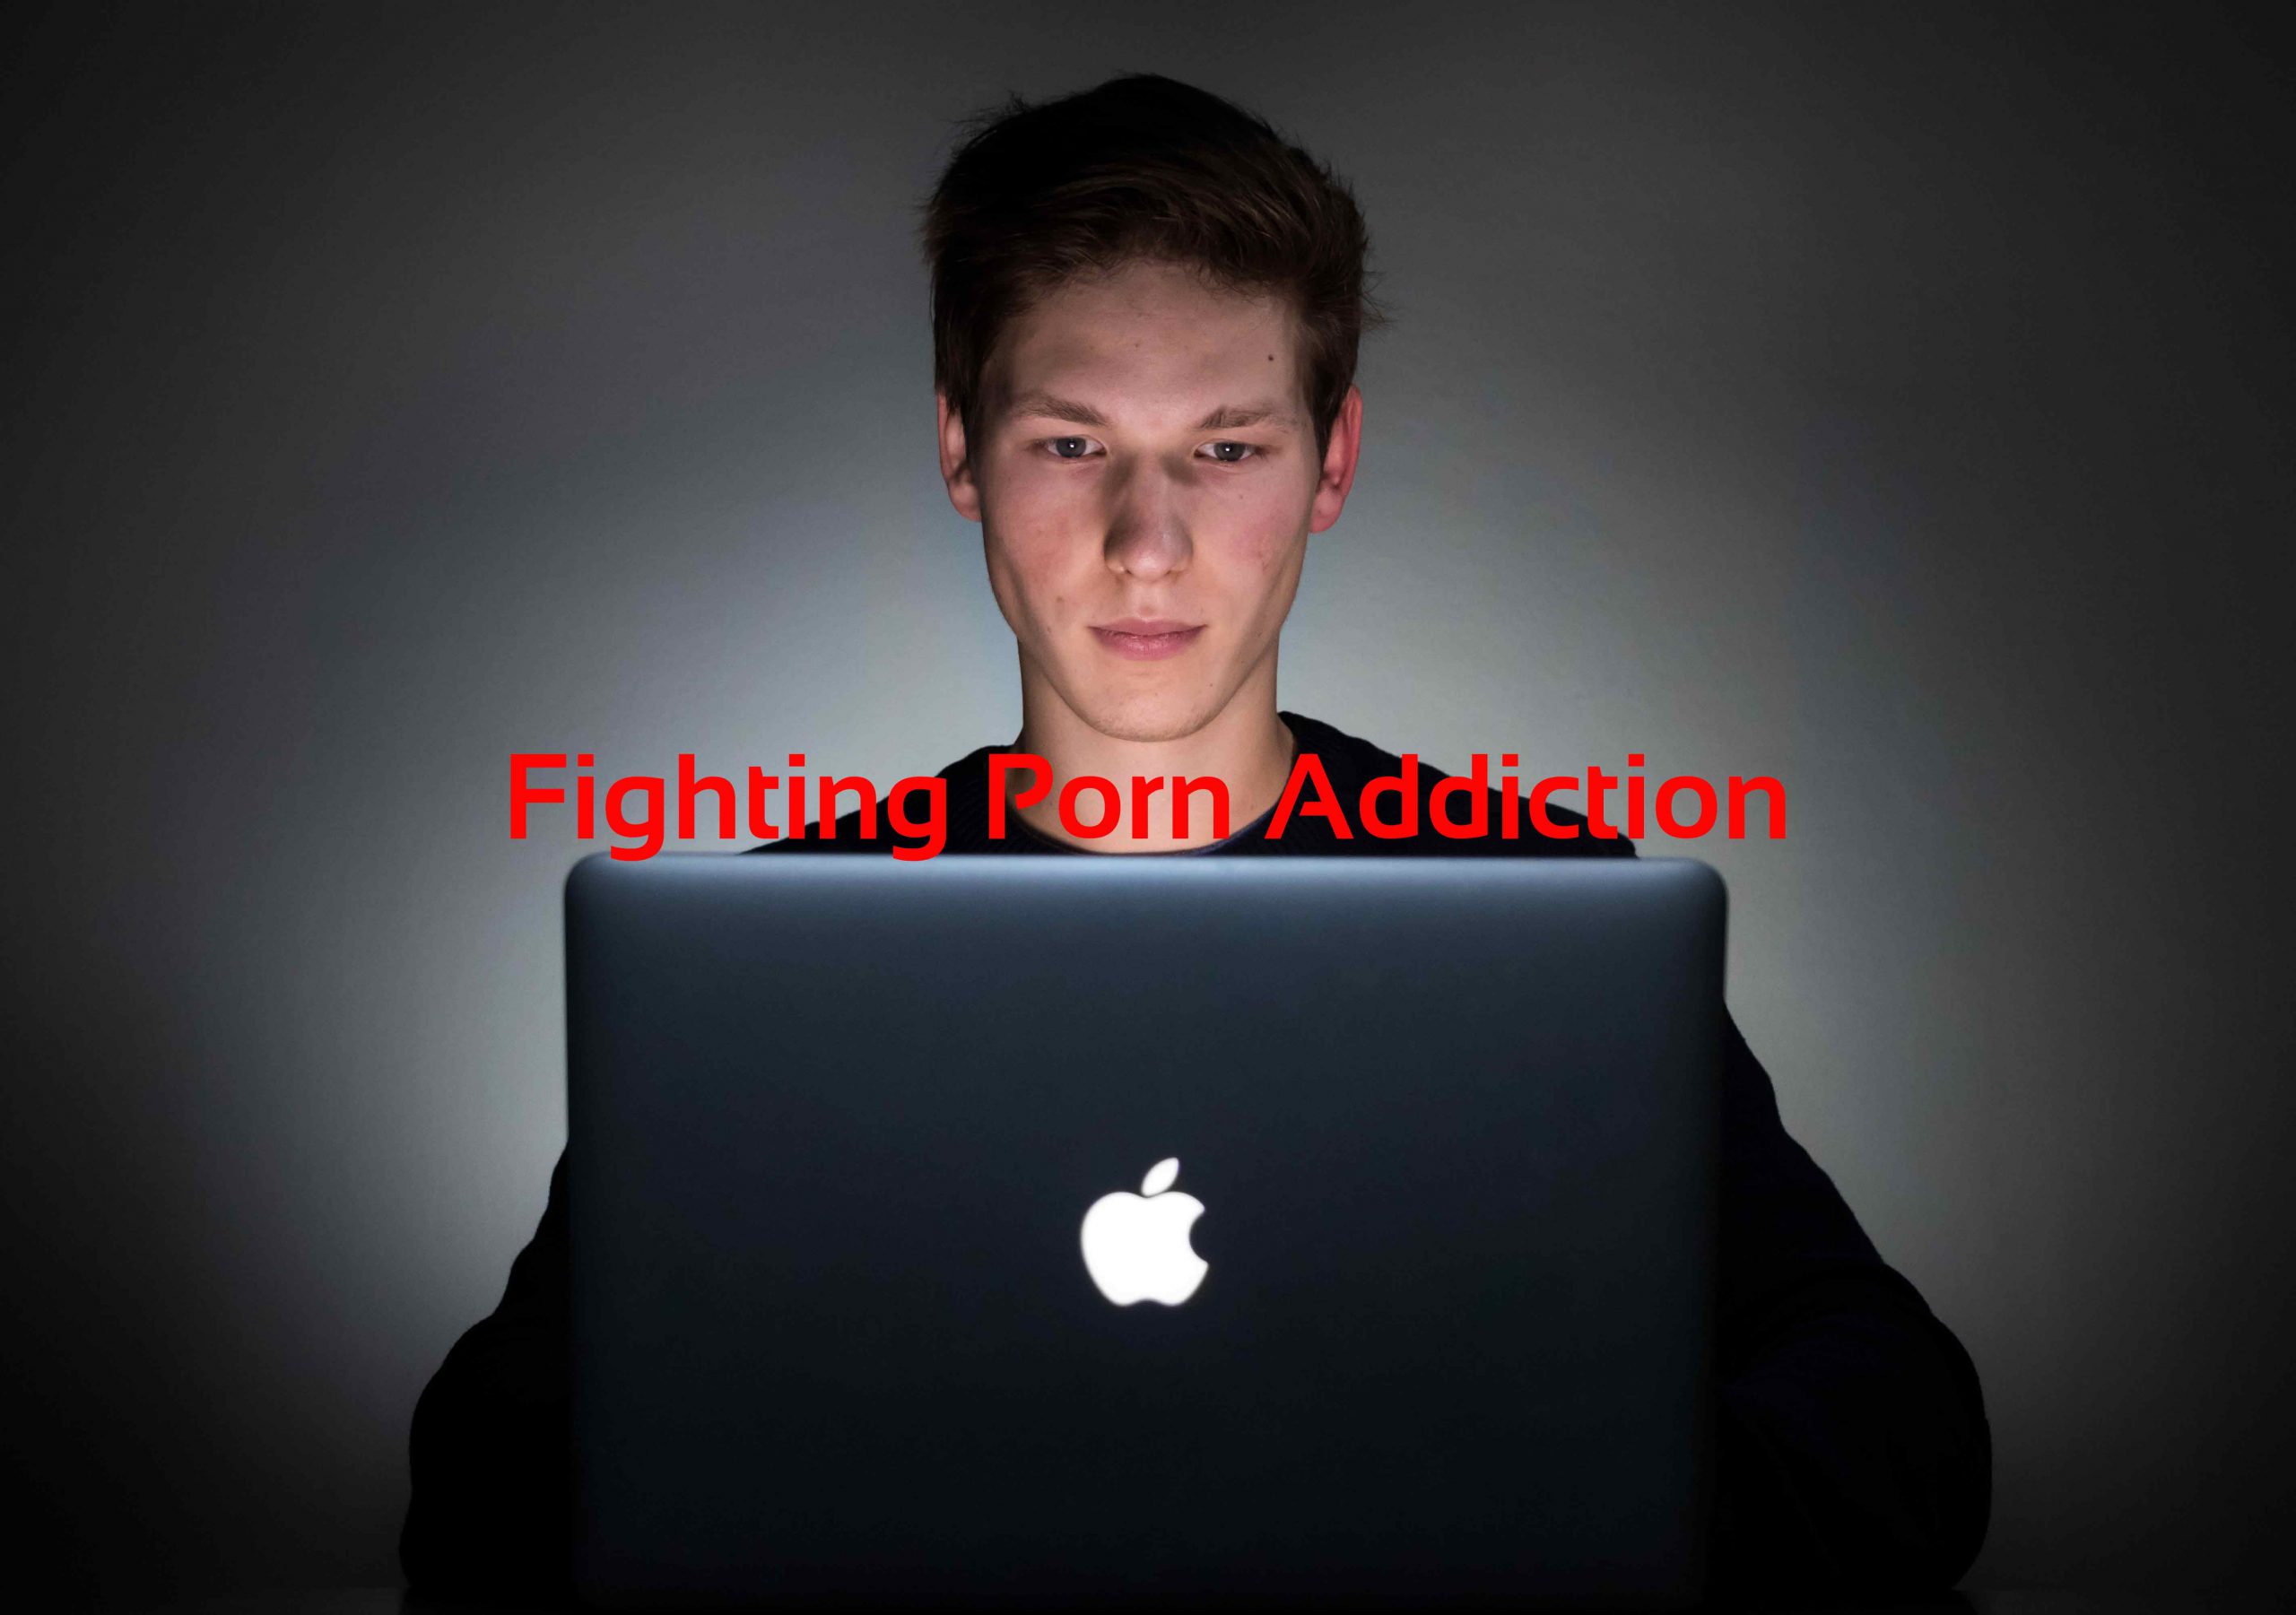 fighting-porn-addiction